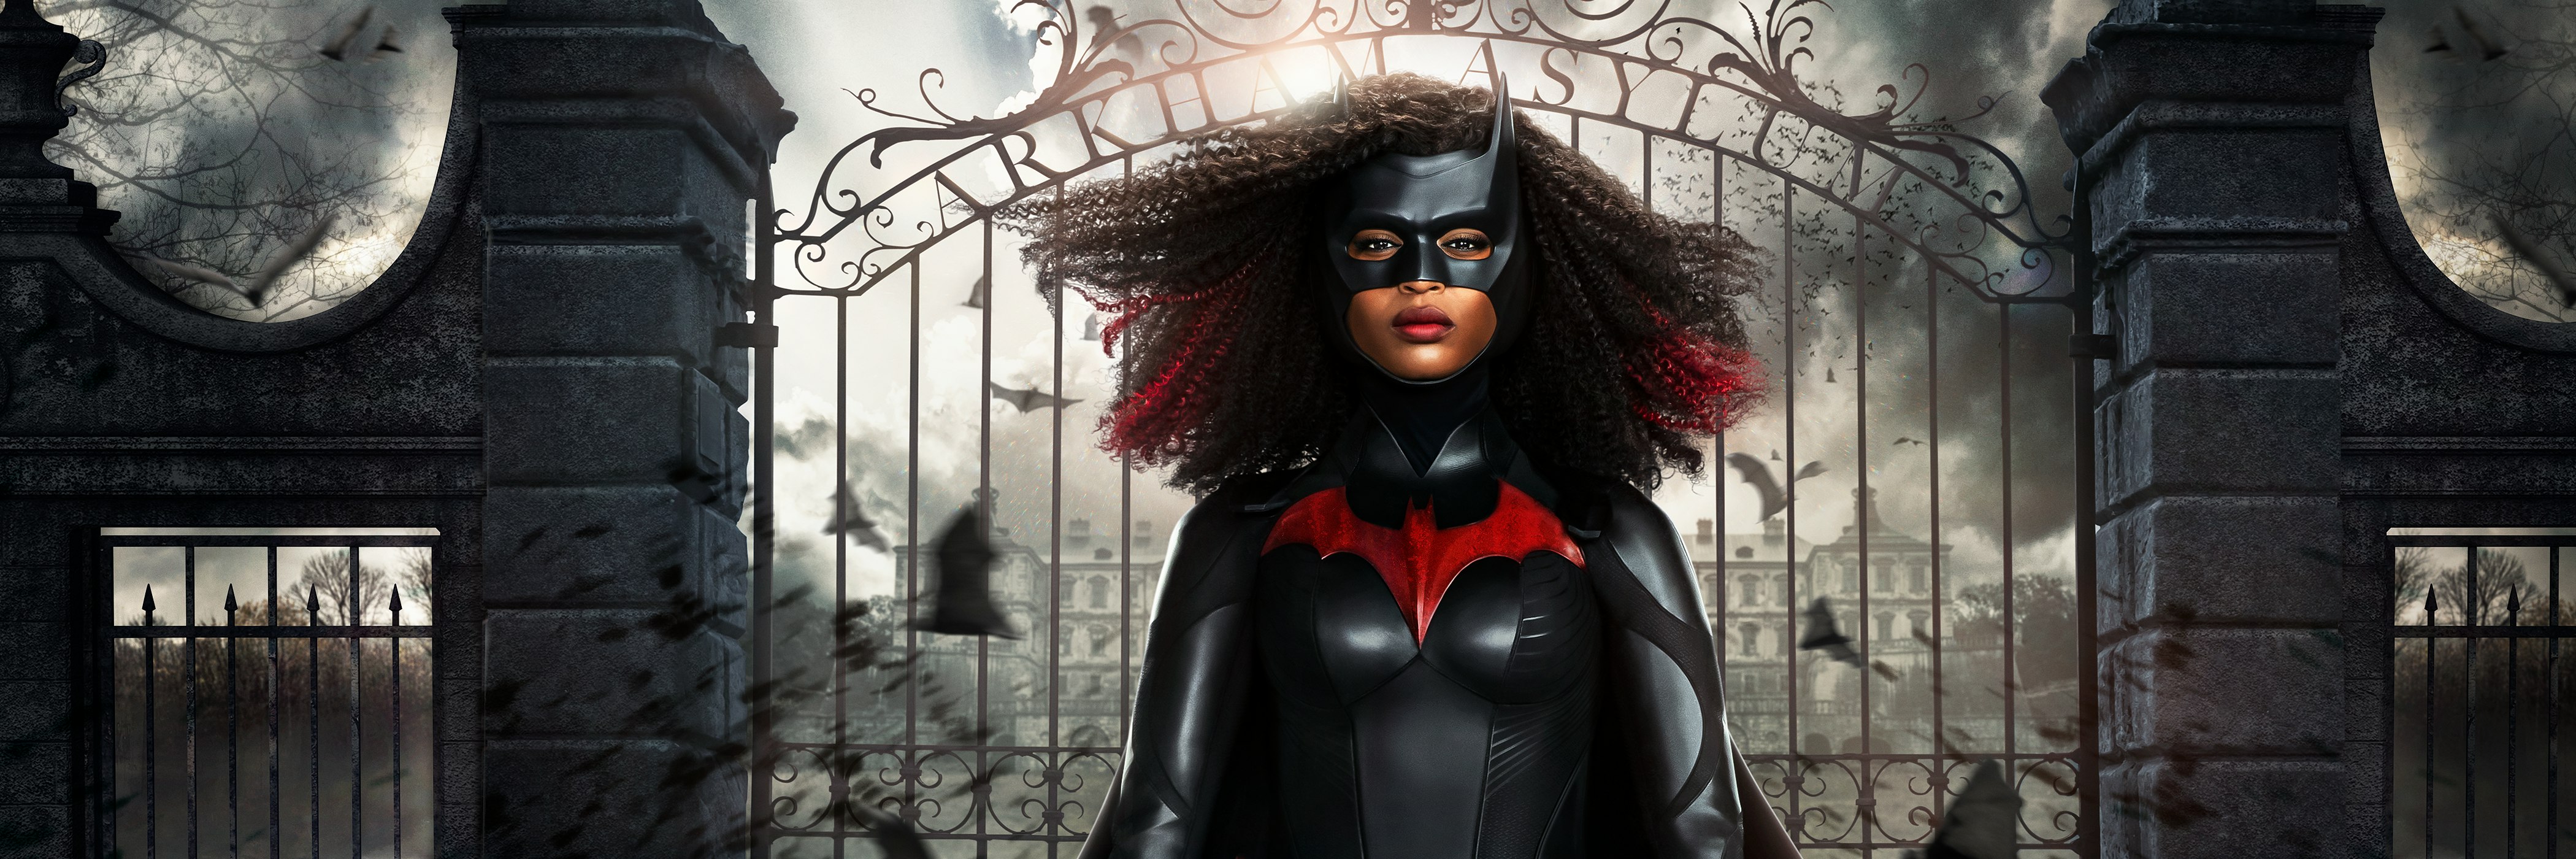 Batwoman season 1 episode 13 live stream: Watch online